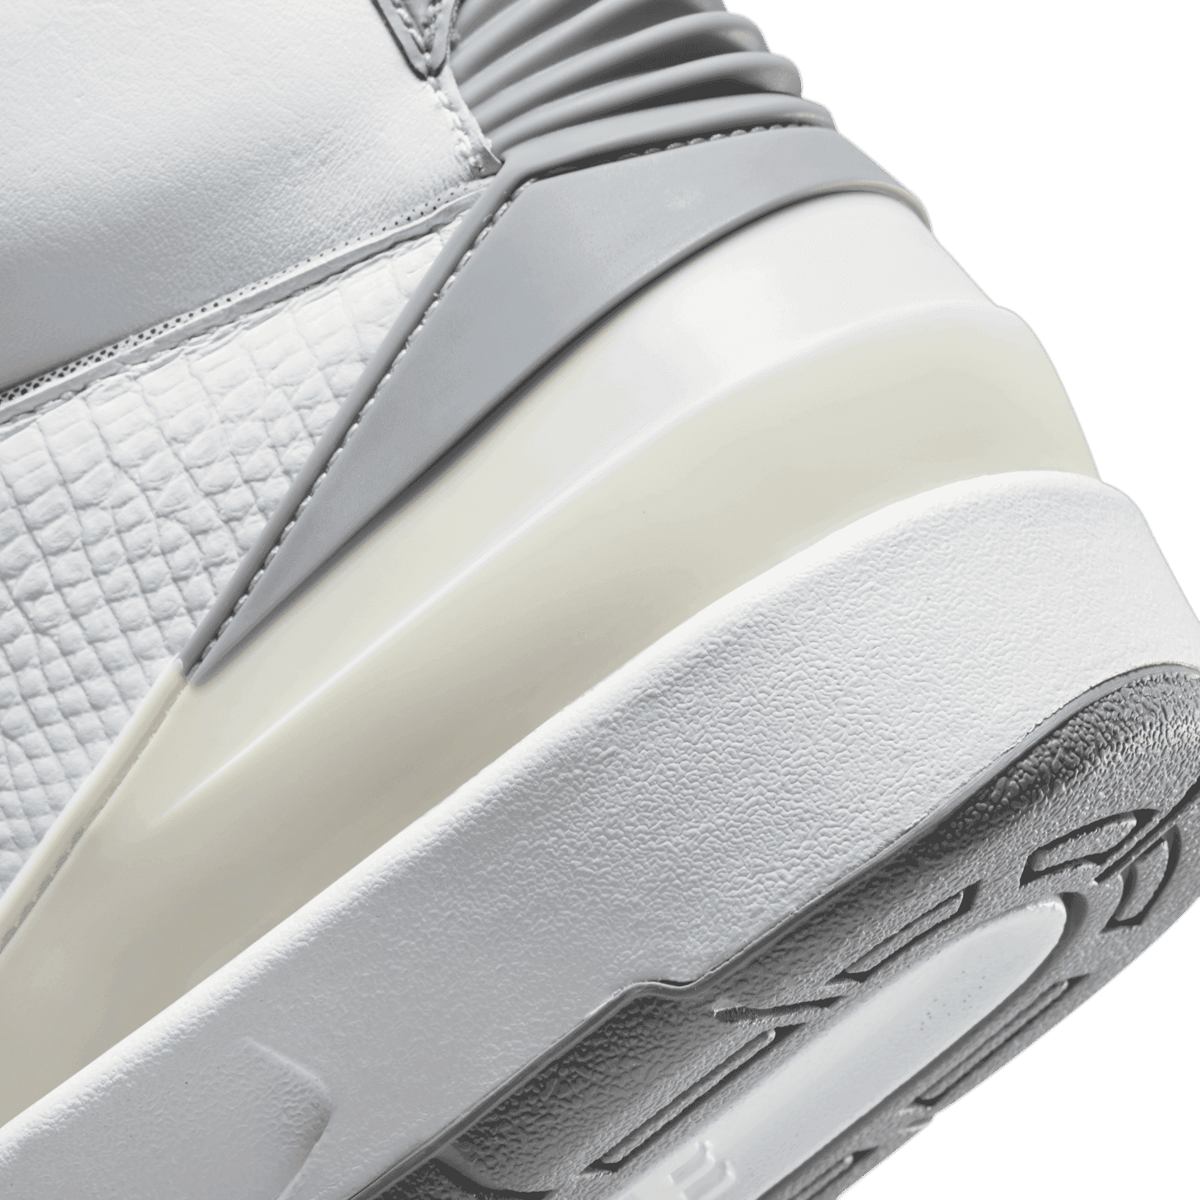 Air Jordan 2 Cement Grey Angle 5